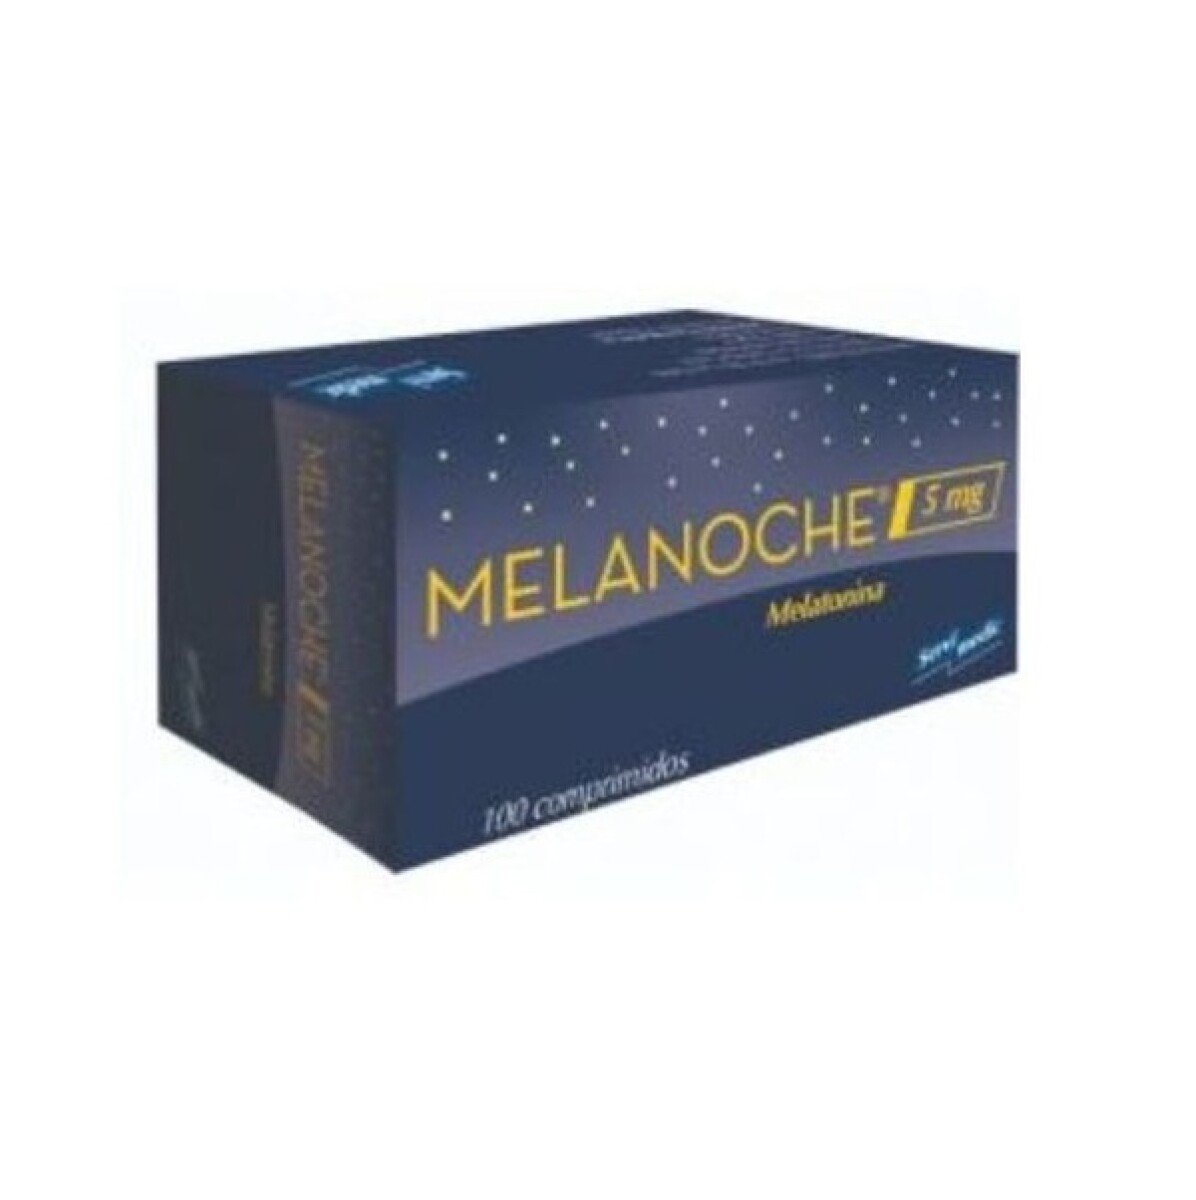 Melanoche 5 Mg. 100 Comp. 